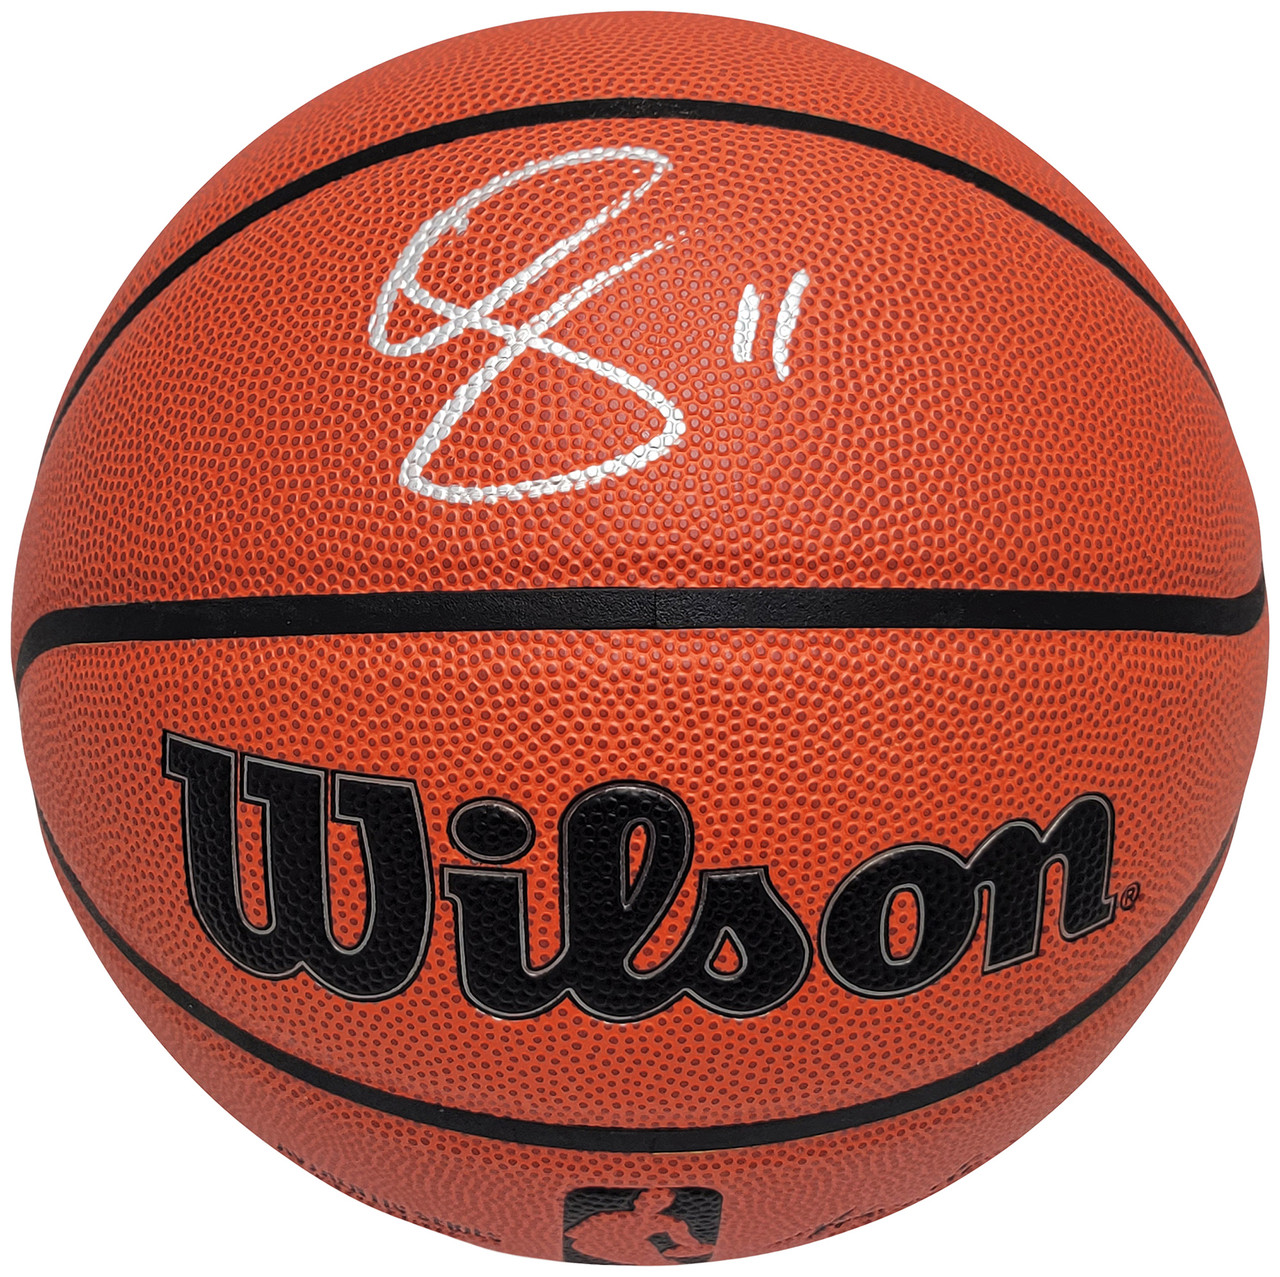 DeMar DeRozan Autographed Chicago Custom Red Basketball Jersey - BAS